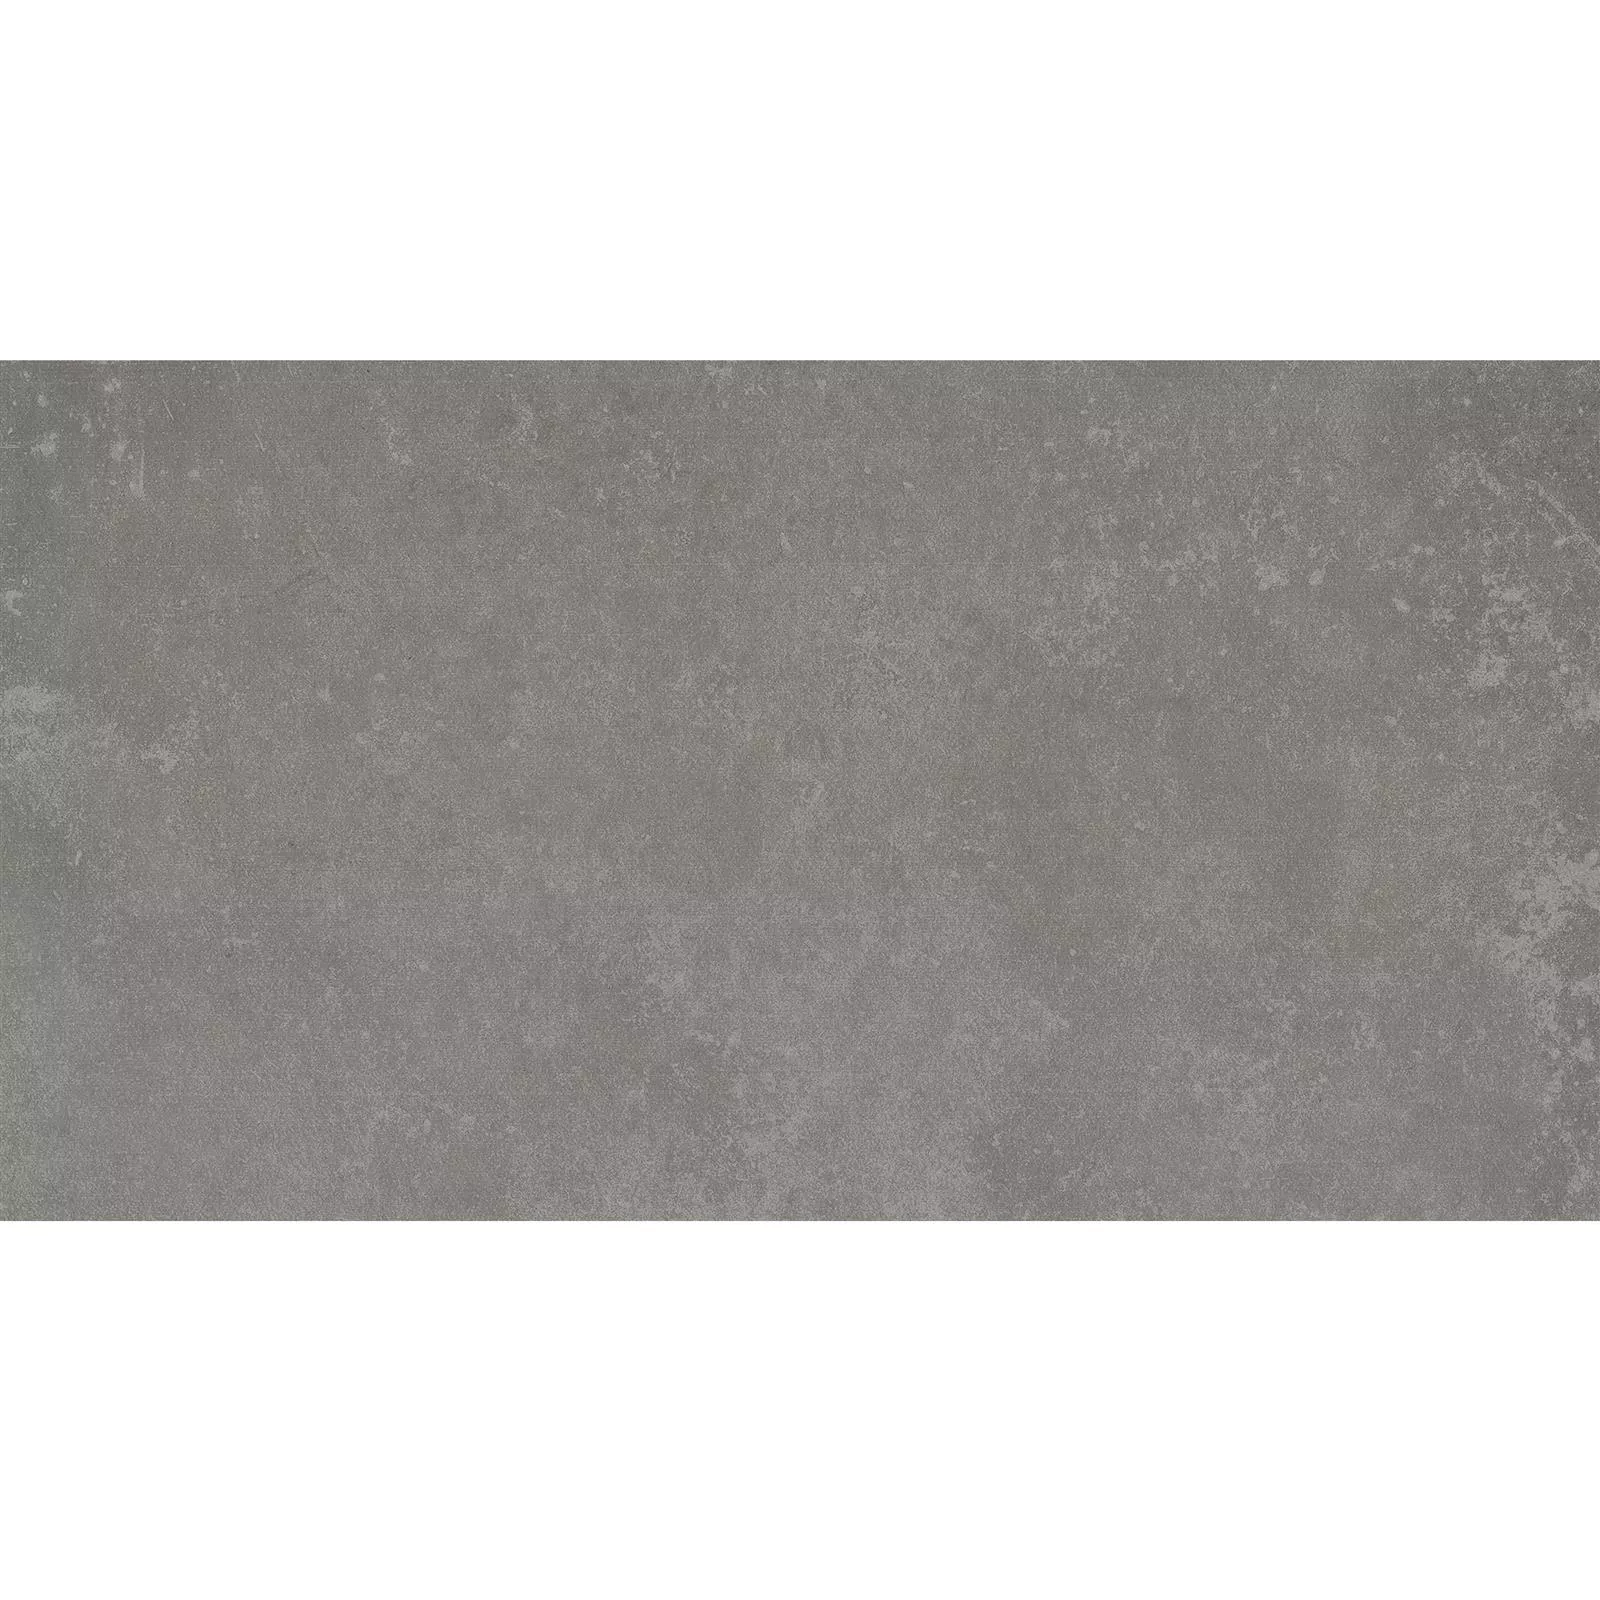 Bodenfliesen Nepal Grau Beige 30x60x0,7cm